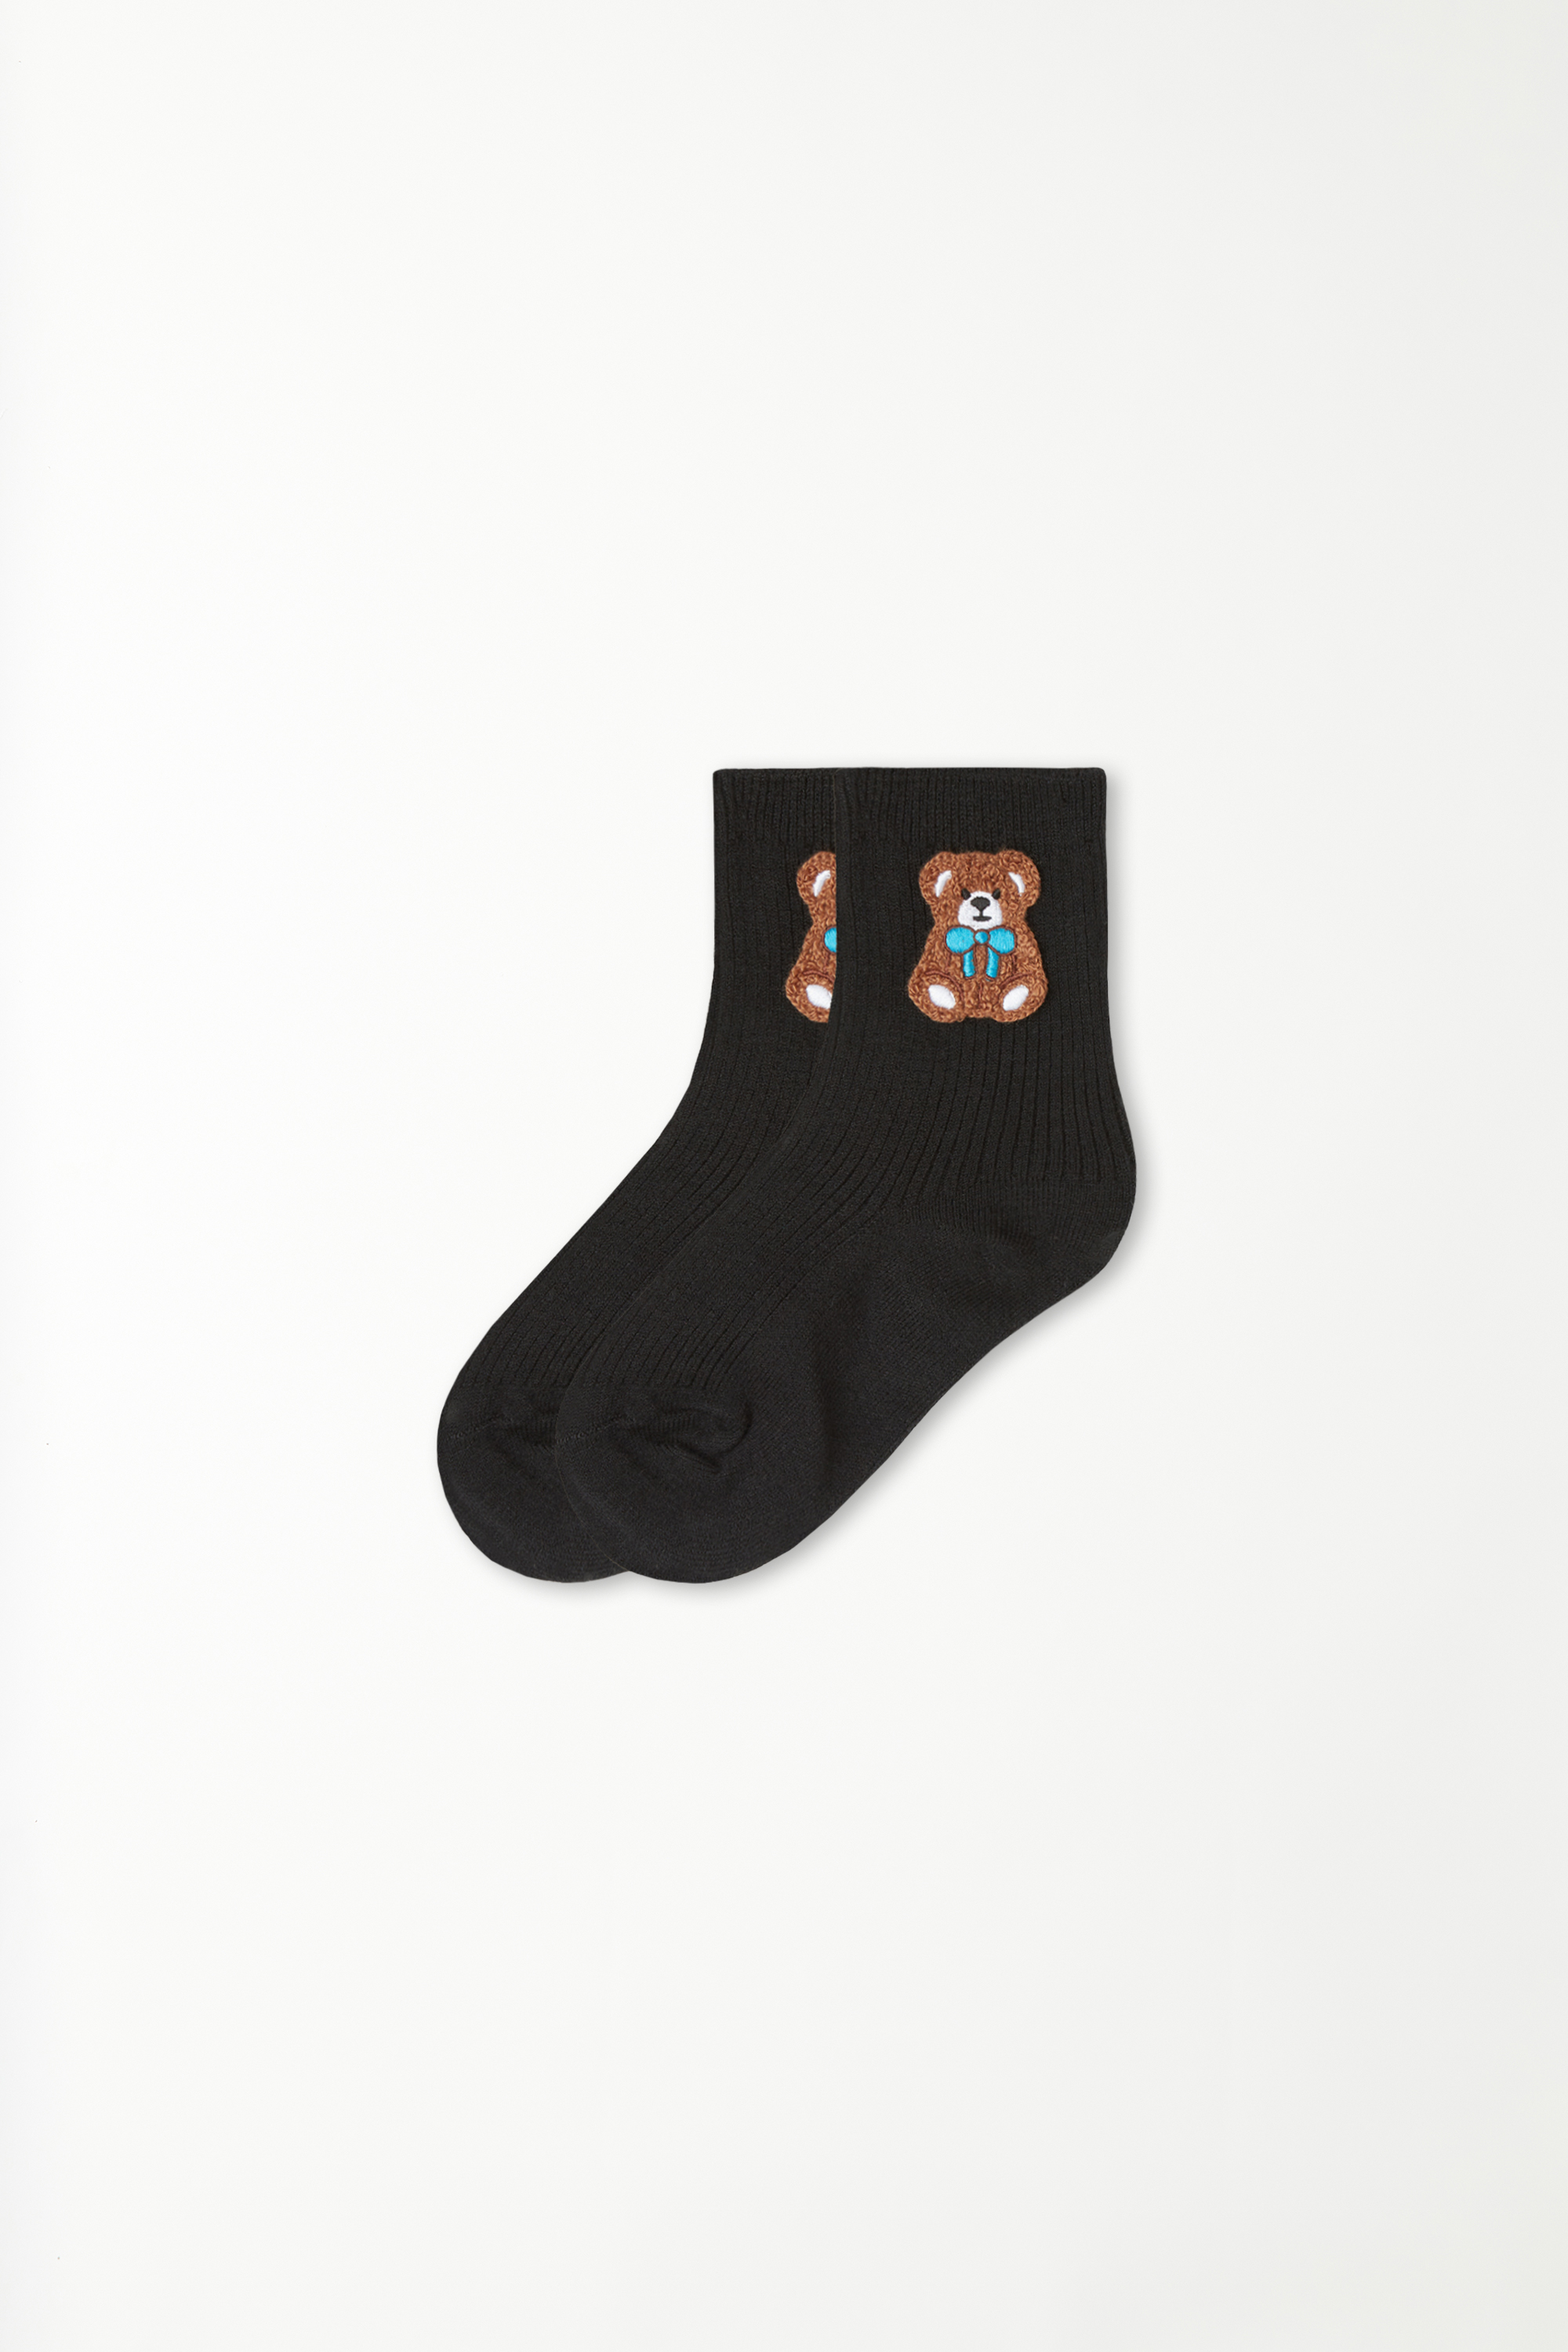 Girls’ 3/4 Ribbed Socks